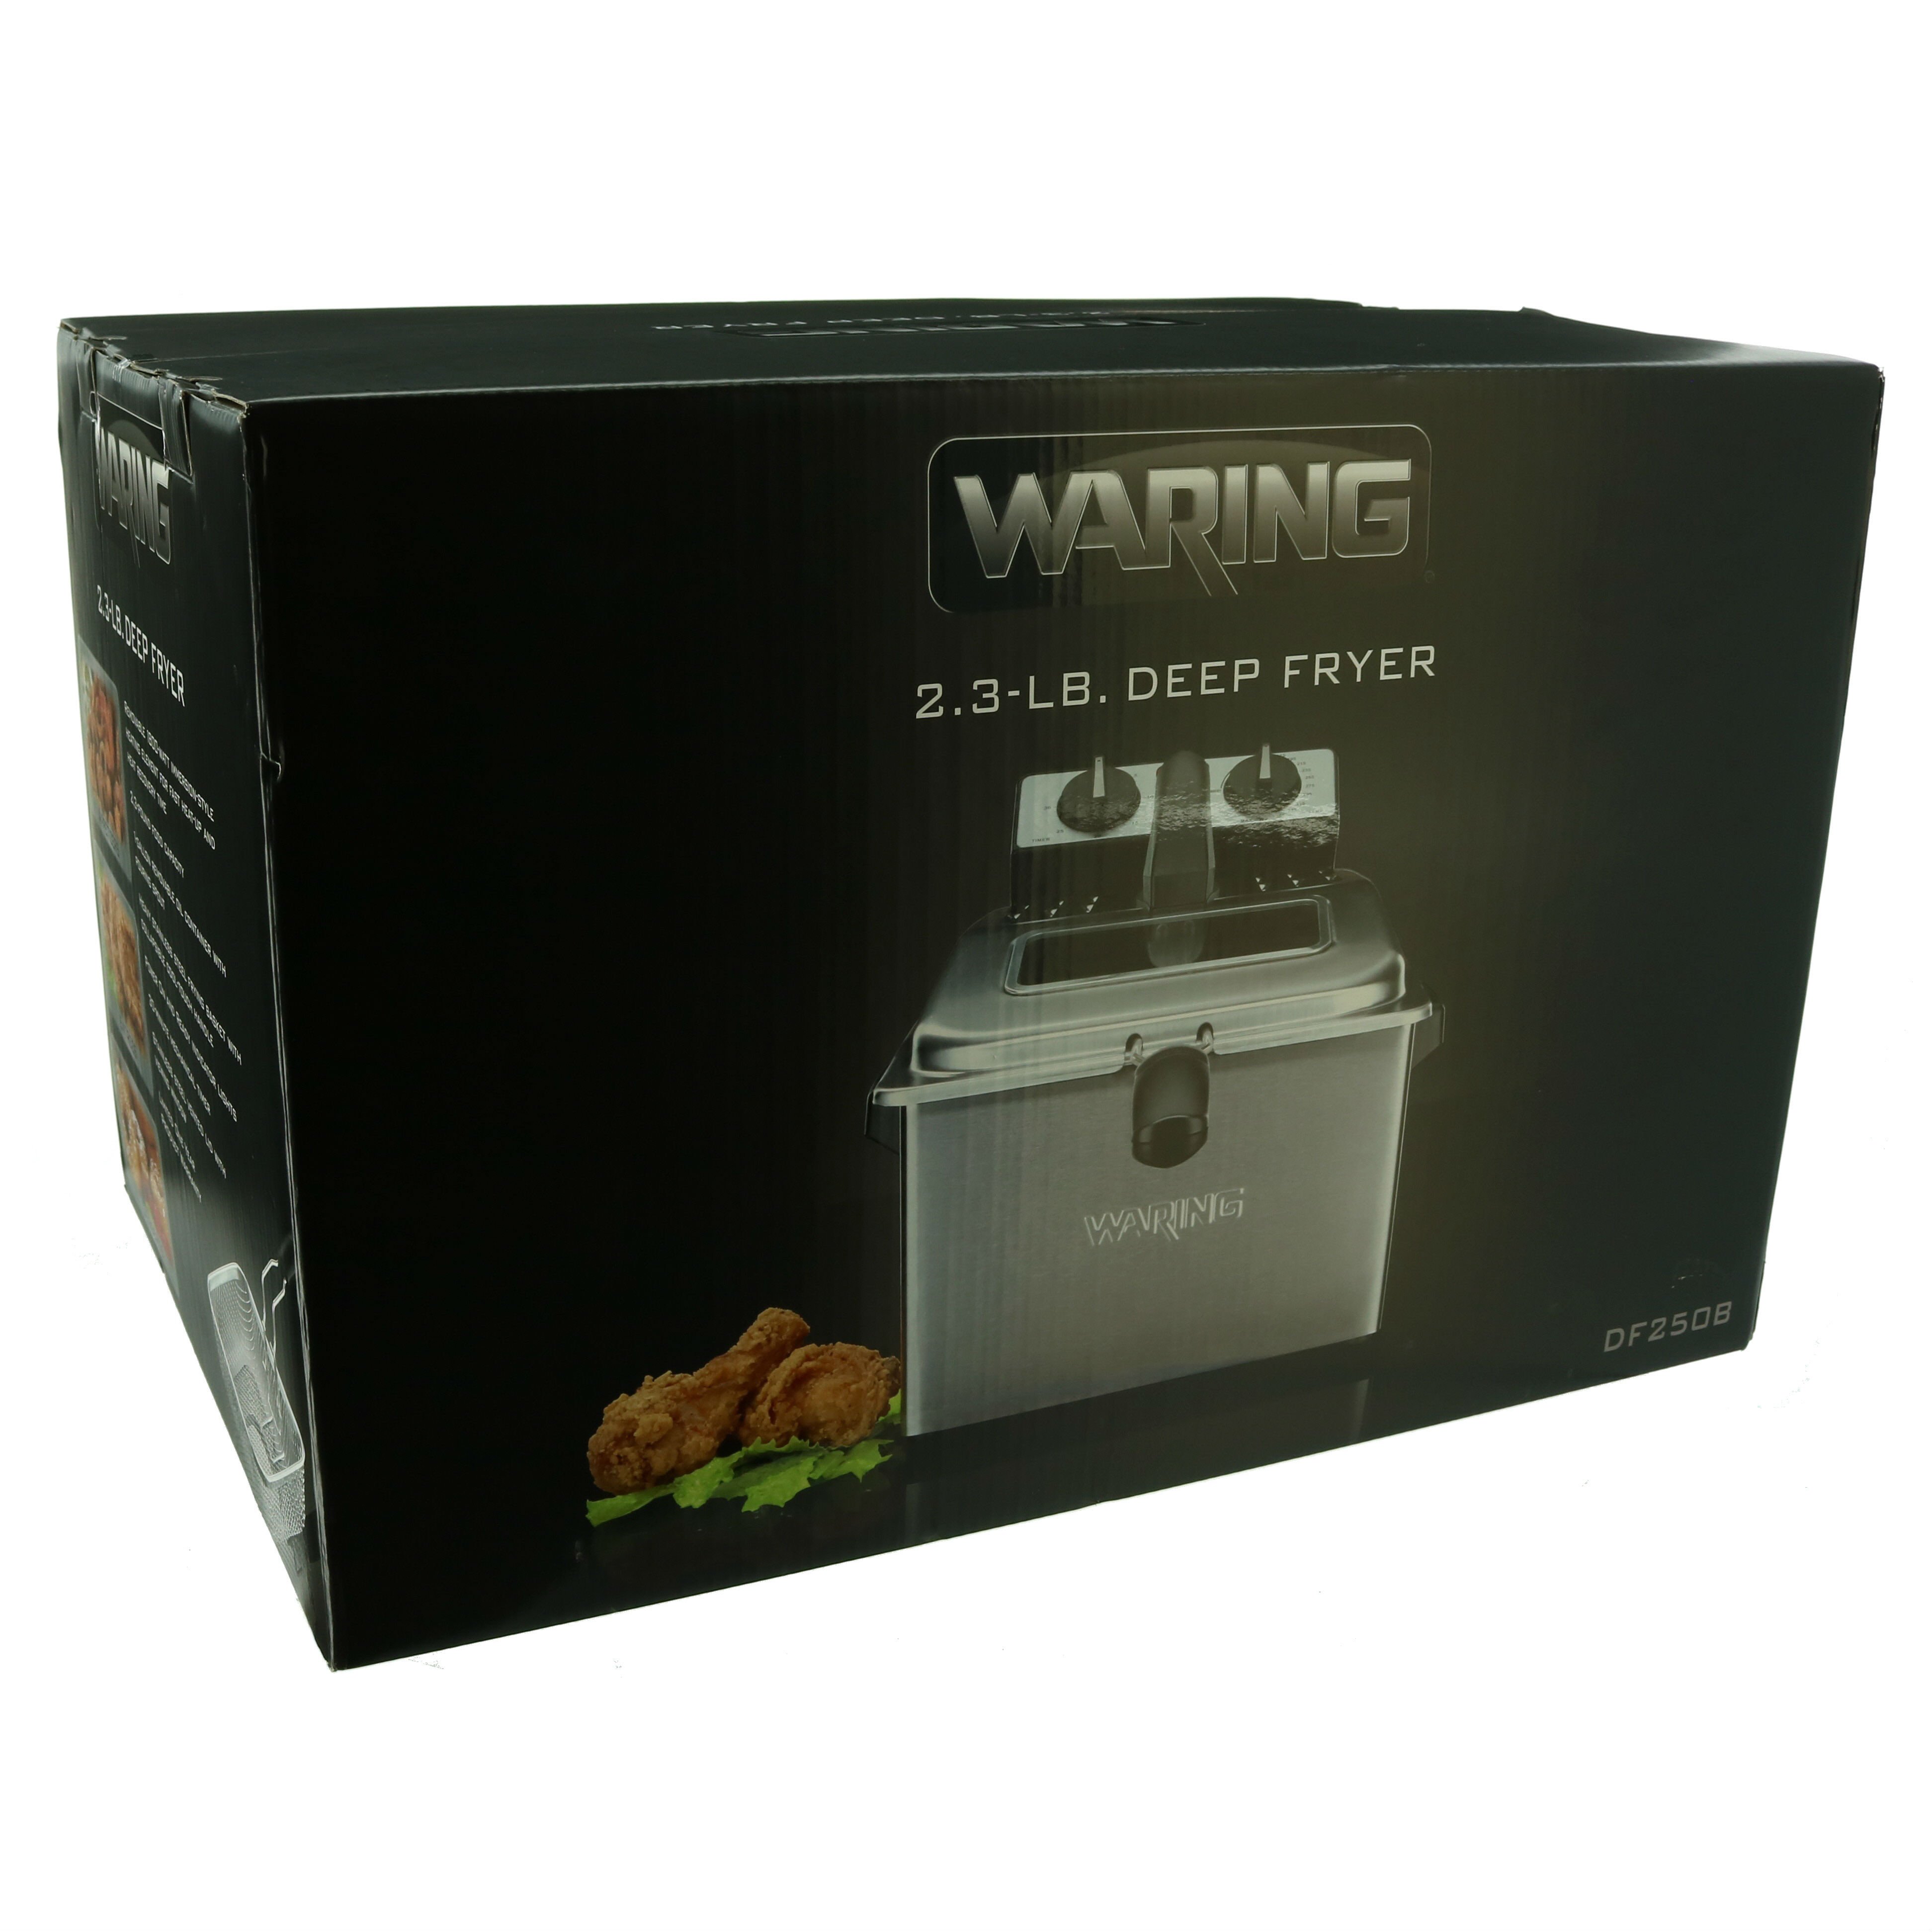 Waring Professional Deep Fryer with 1800-Watt Heating Element